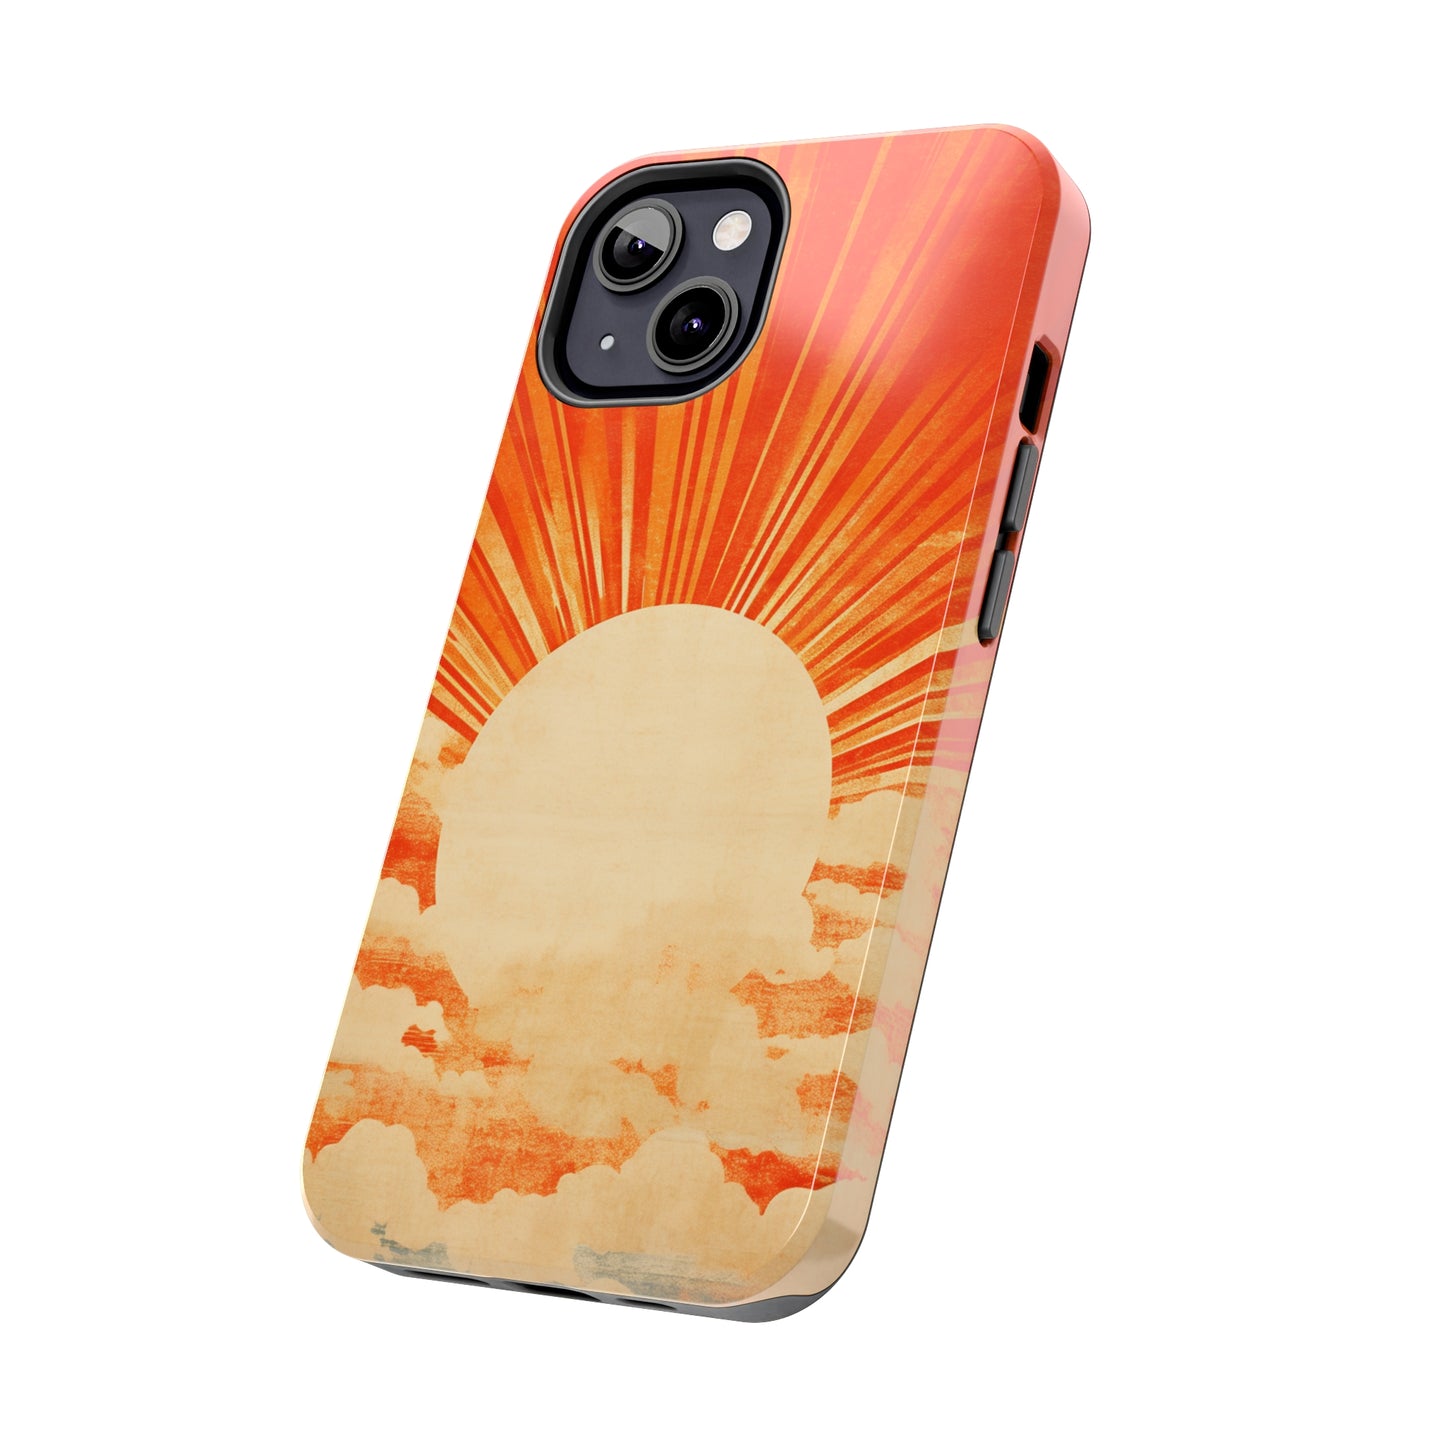 Retro Abstract Sunburst iPhone Case | Embrace the Nostalgic Charm of Artistic Rays